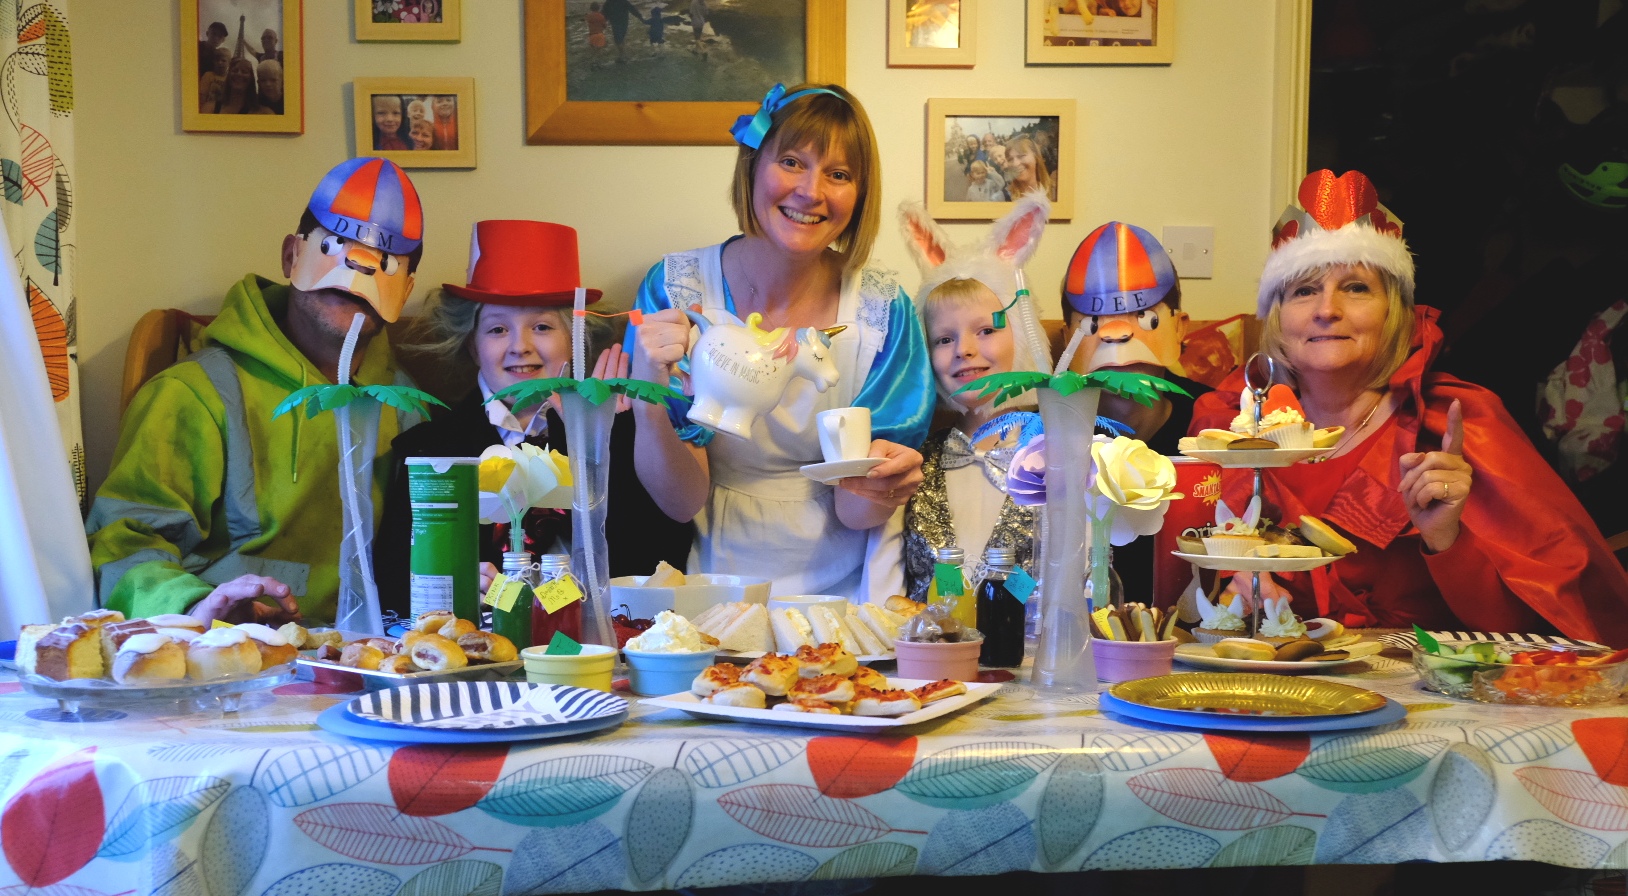 Isle of Wight County Press: Happy Un Birthday - a wonderful day in Wonderland!